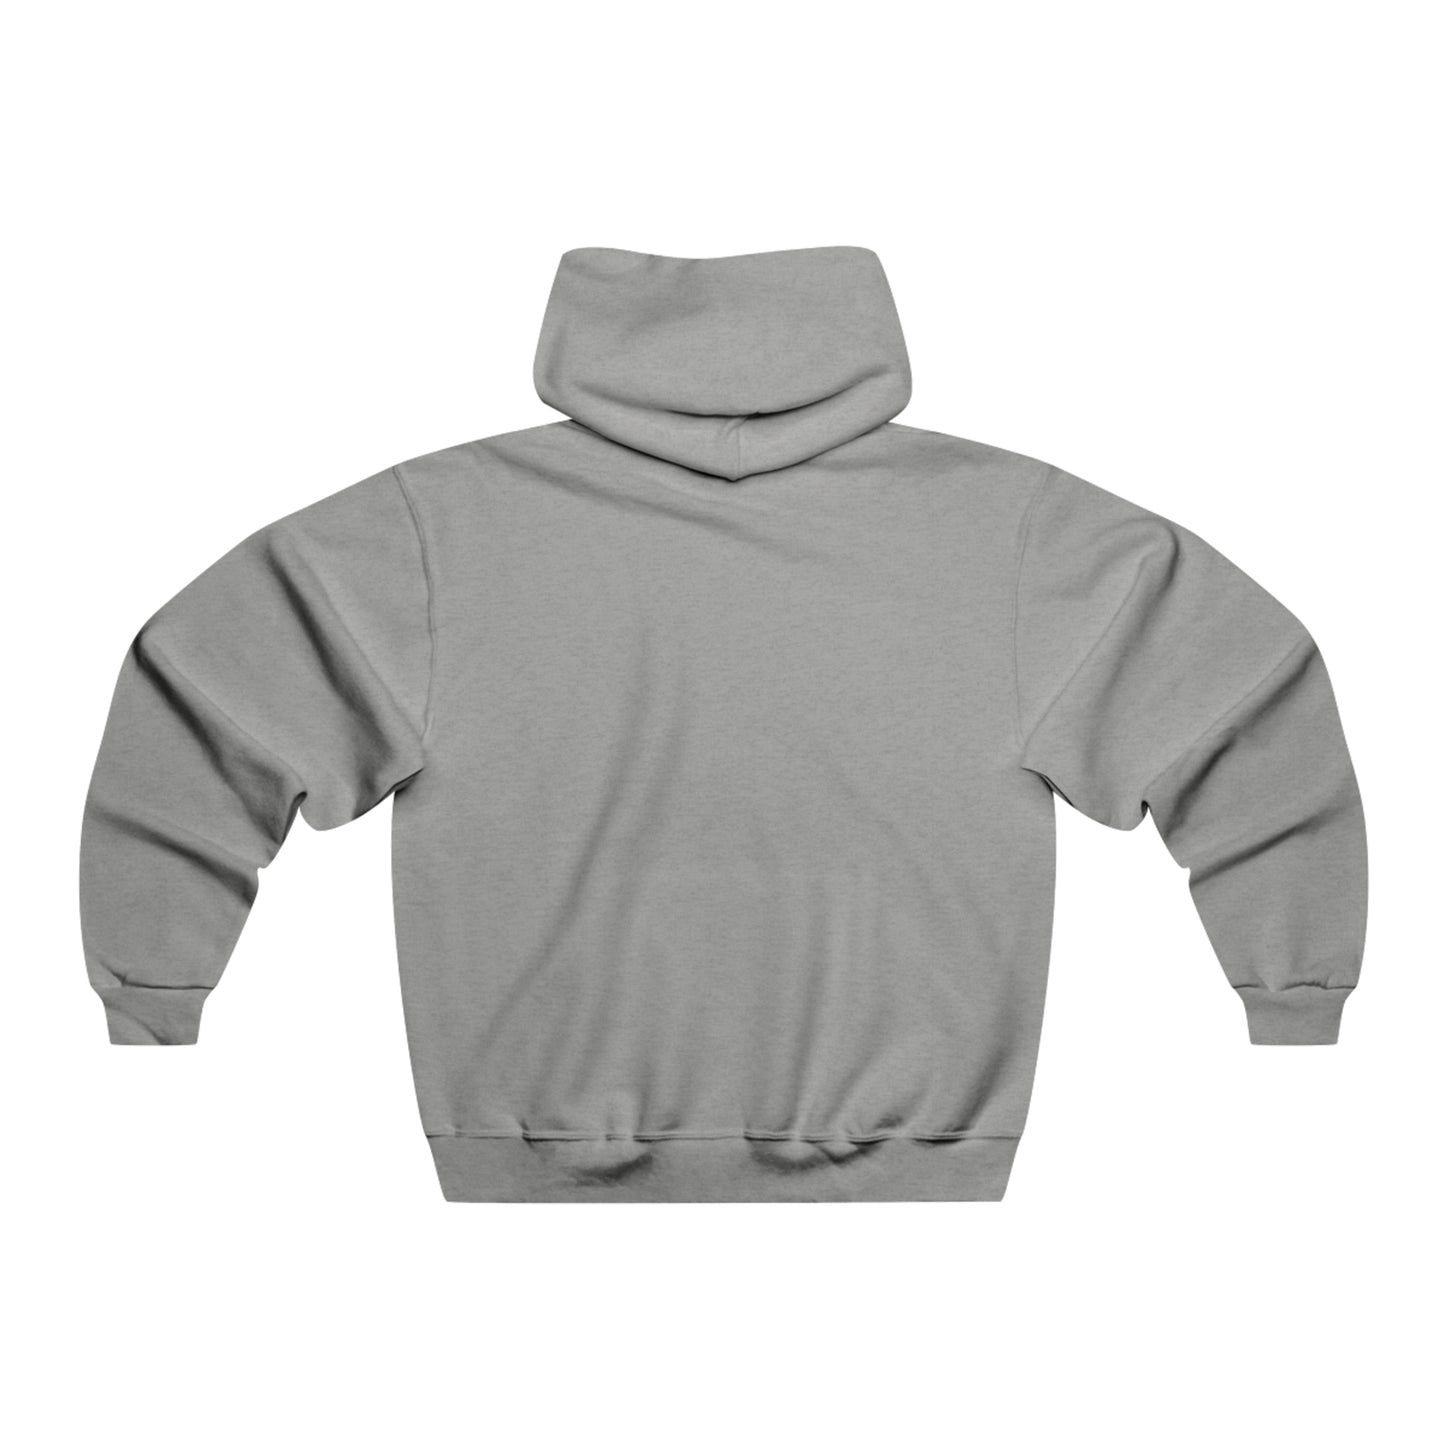 ADHD Aquatics Men's NUBLEND® Hooded Sweatshirt